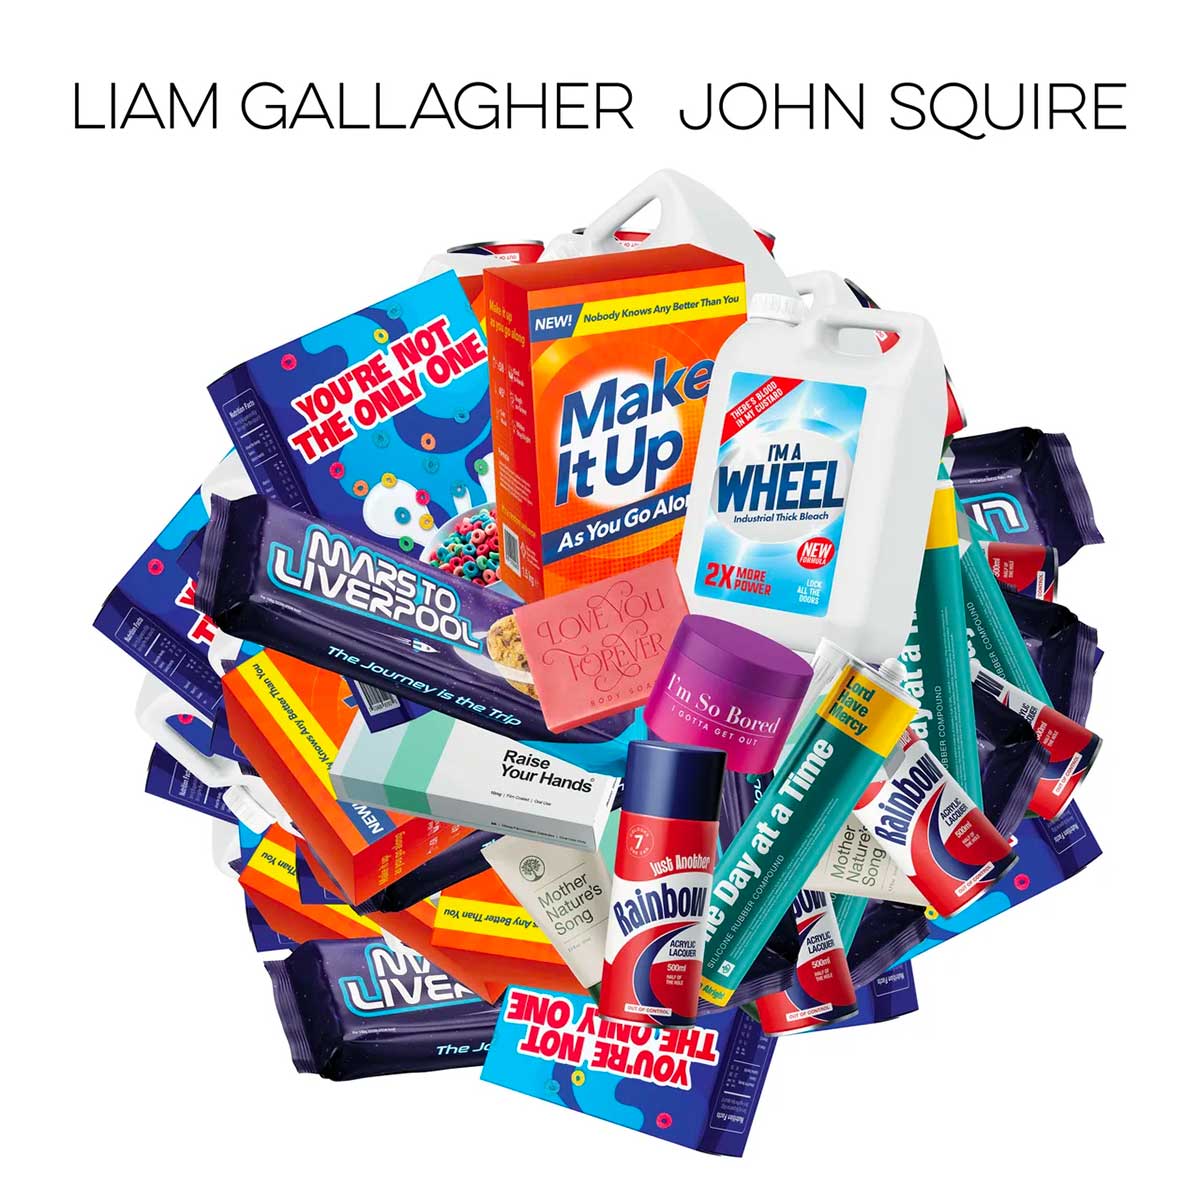 Tapa de Liam Gallagher & John Squire, disco de Liam Gallagher & John Squire